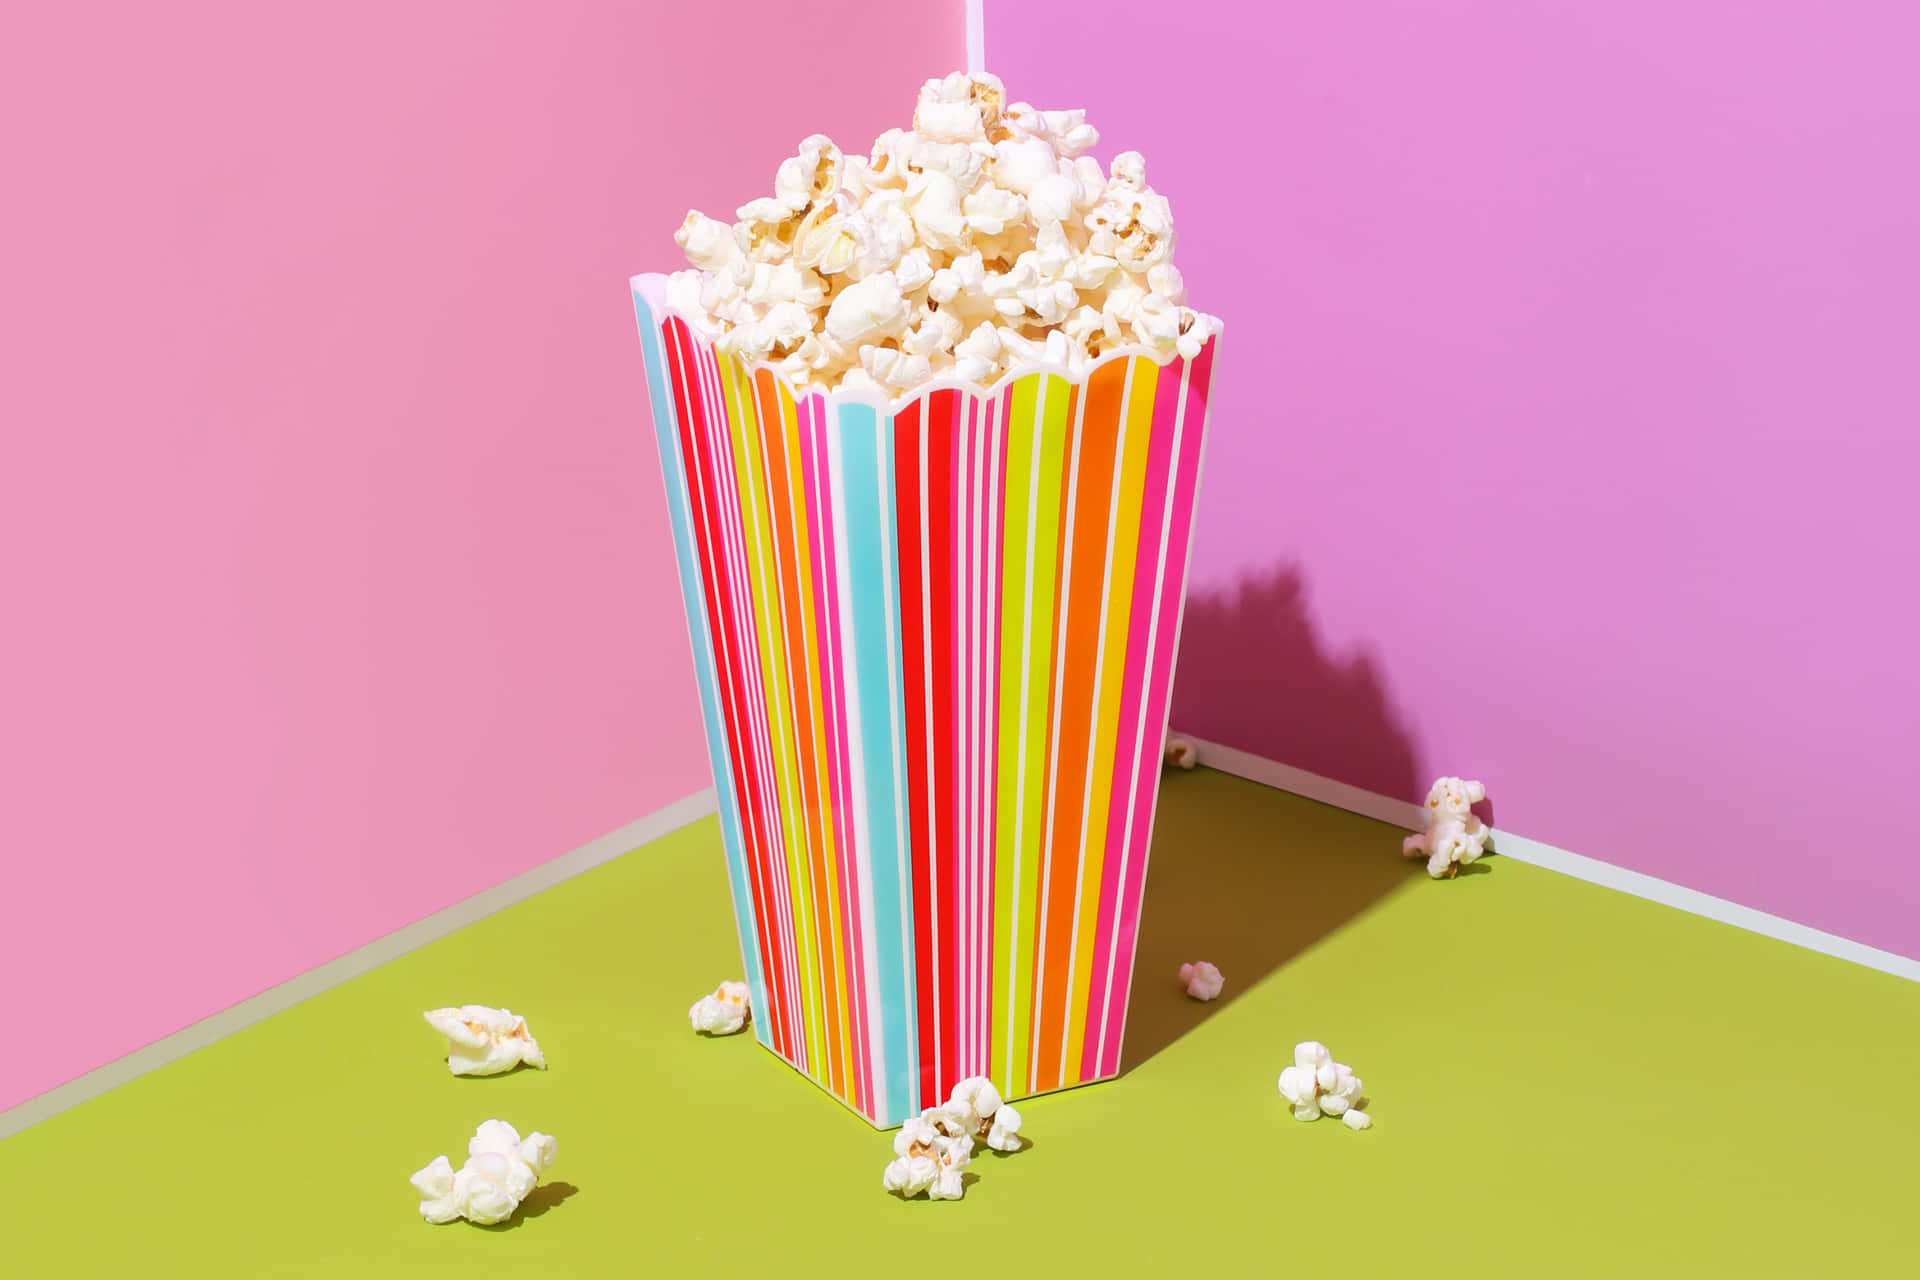 Enjoy Movie Night with Delicious Popcorn